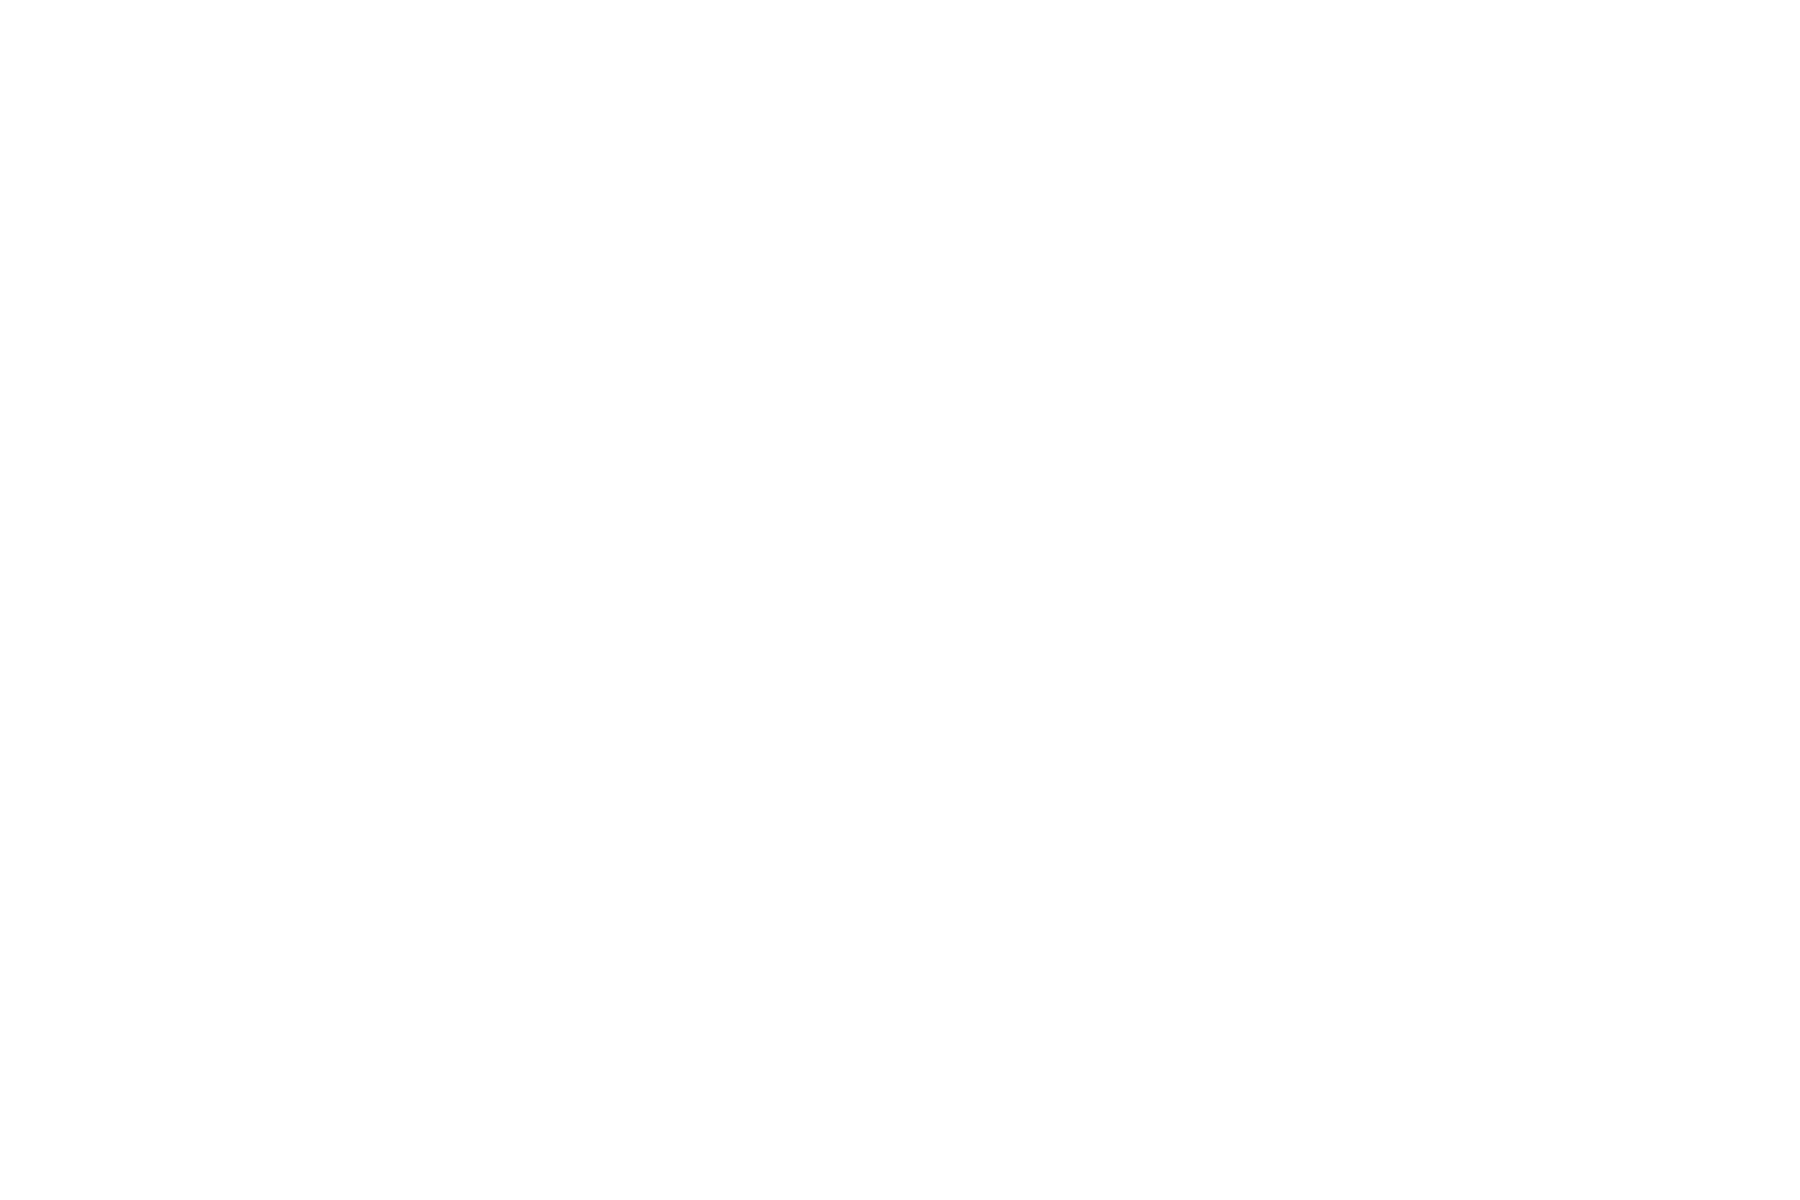 Retopologisierung